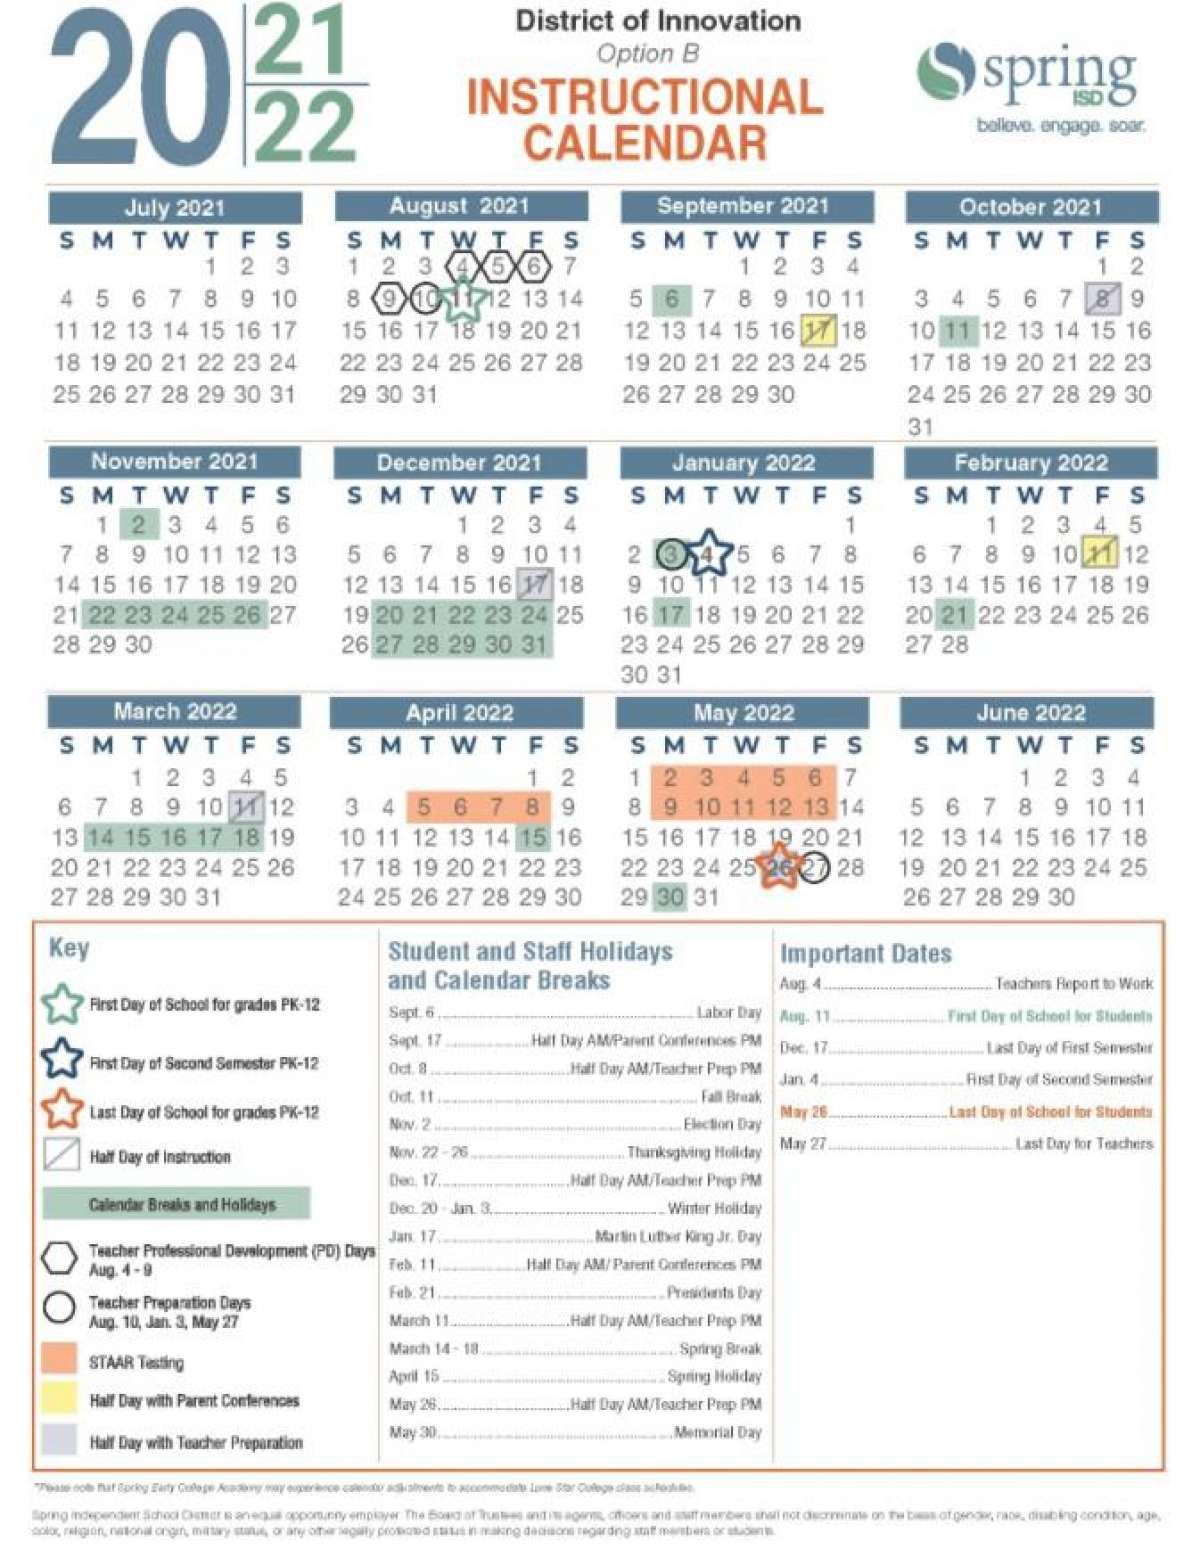 Get February 2022 School Calendar